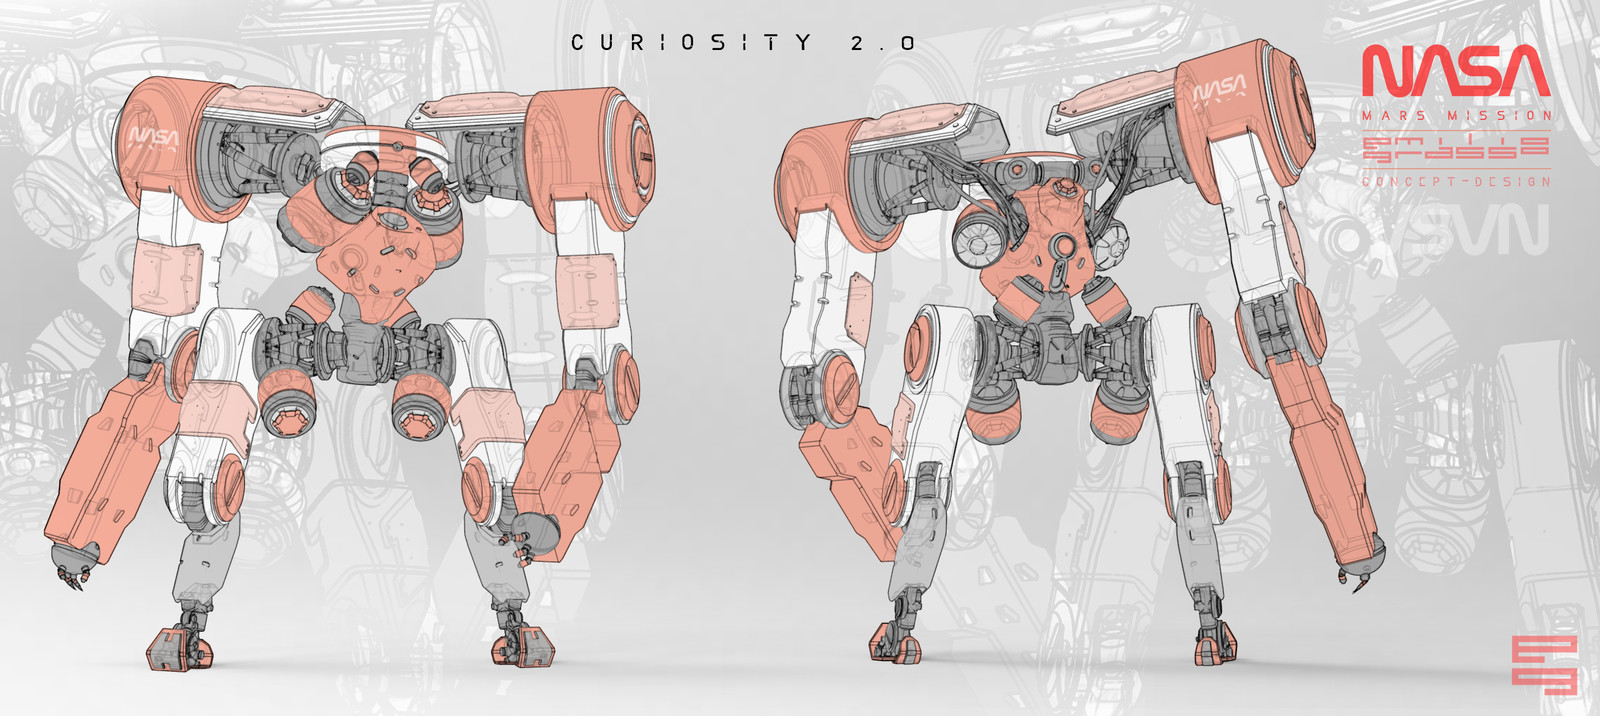 Curiosity 2.0